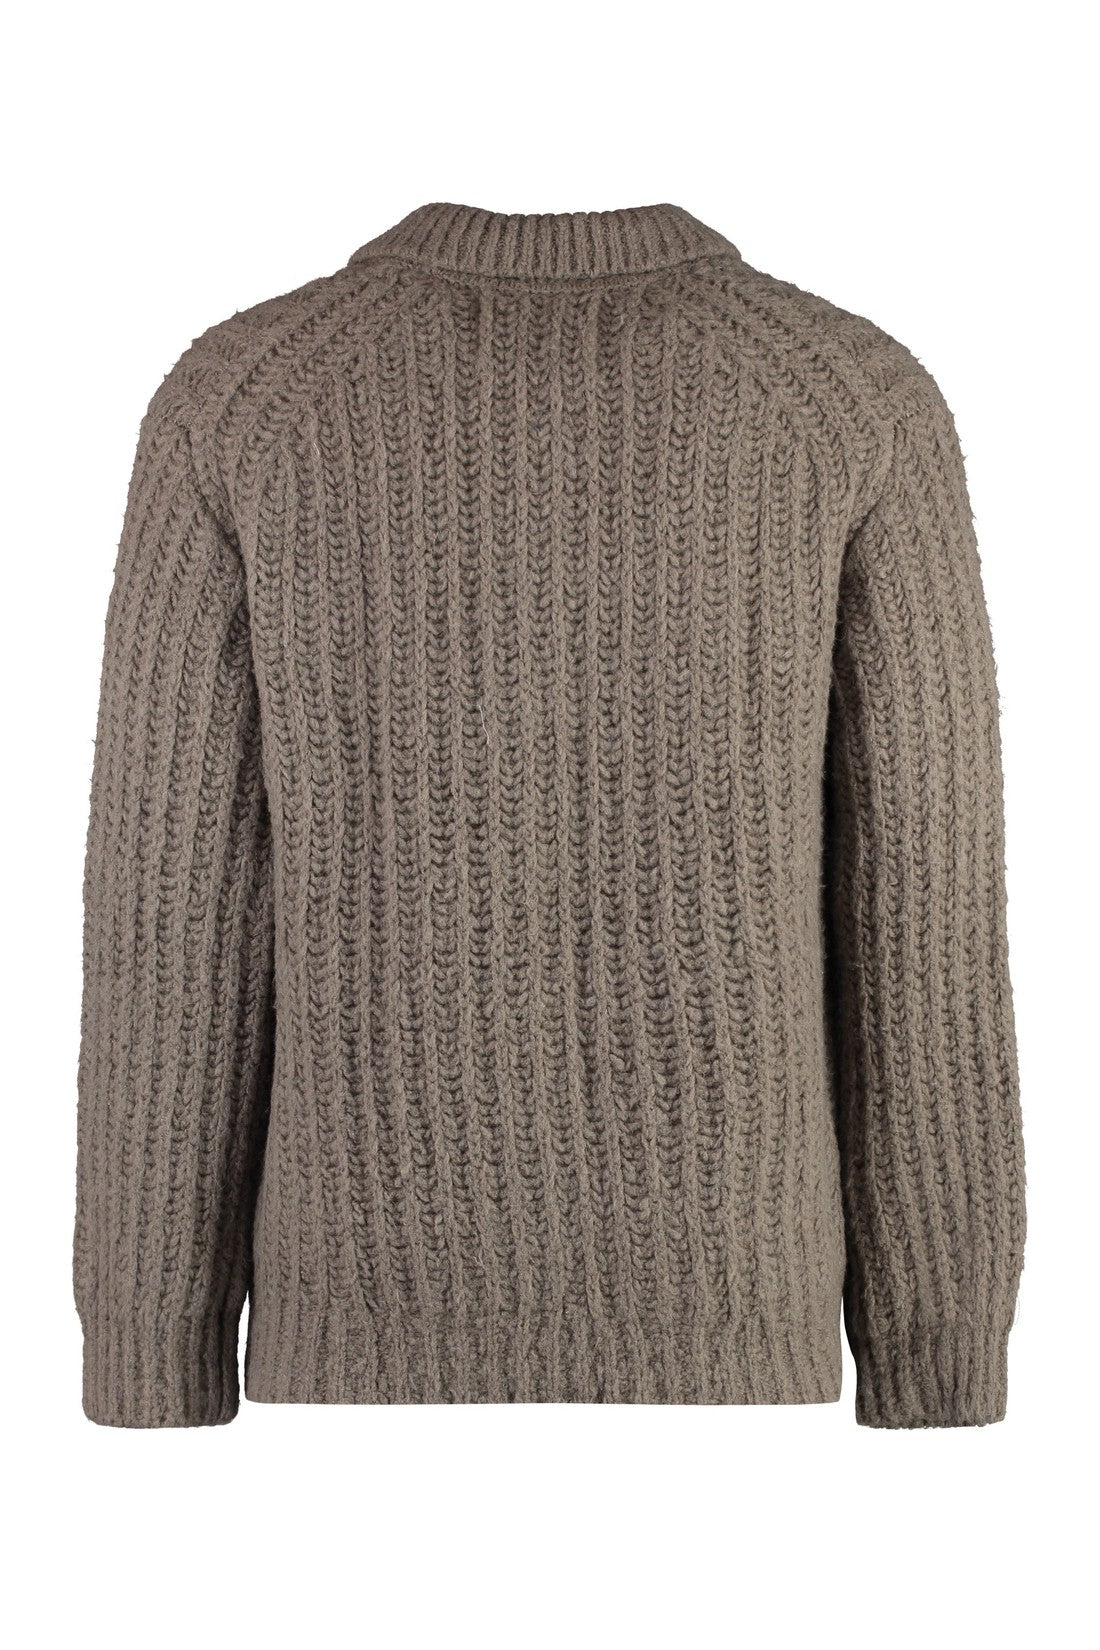 GANT-OUTLET-SALE-Wool-blend crew-neck sweater-ARCHIVIST